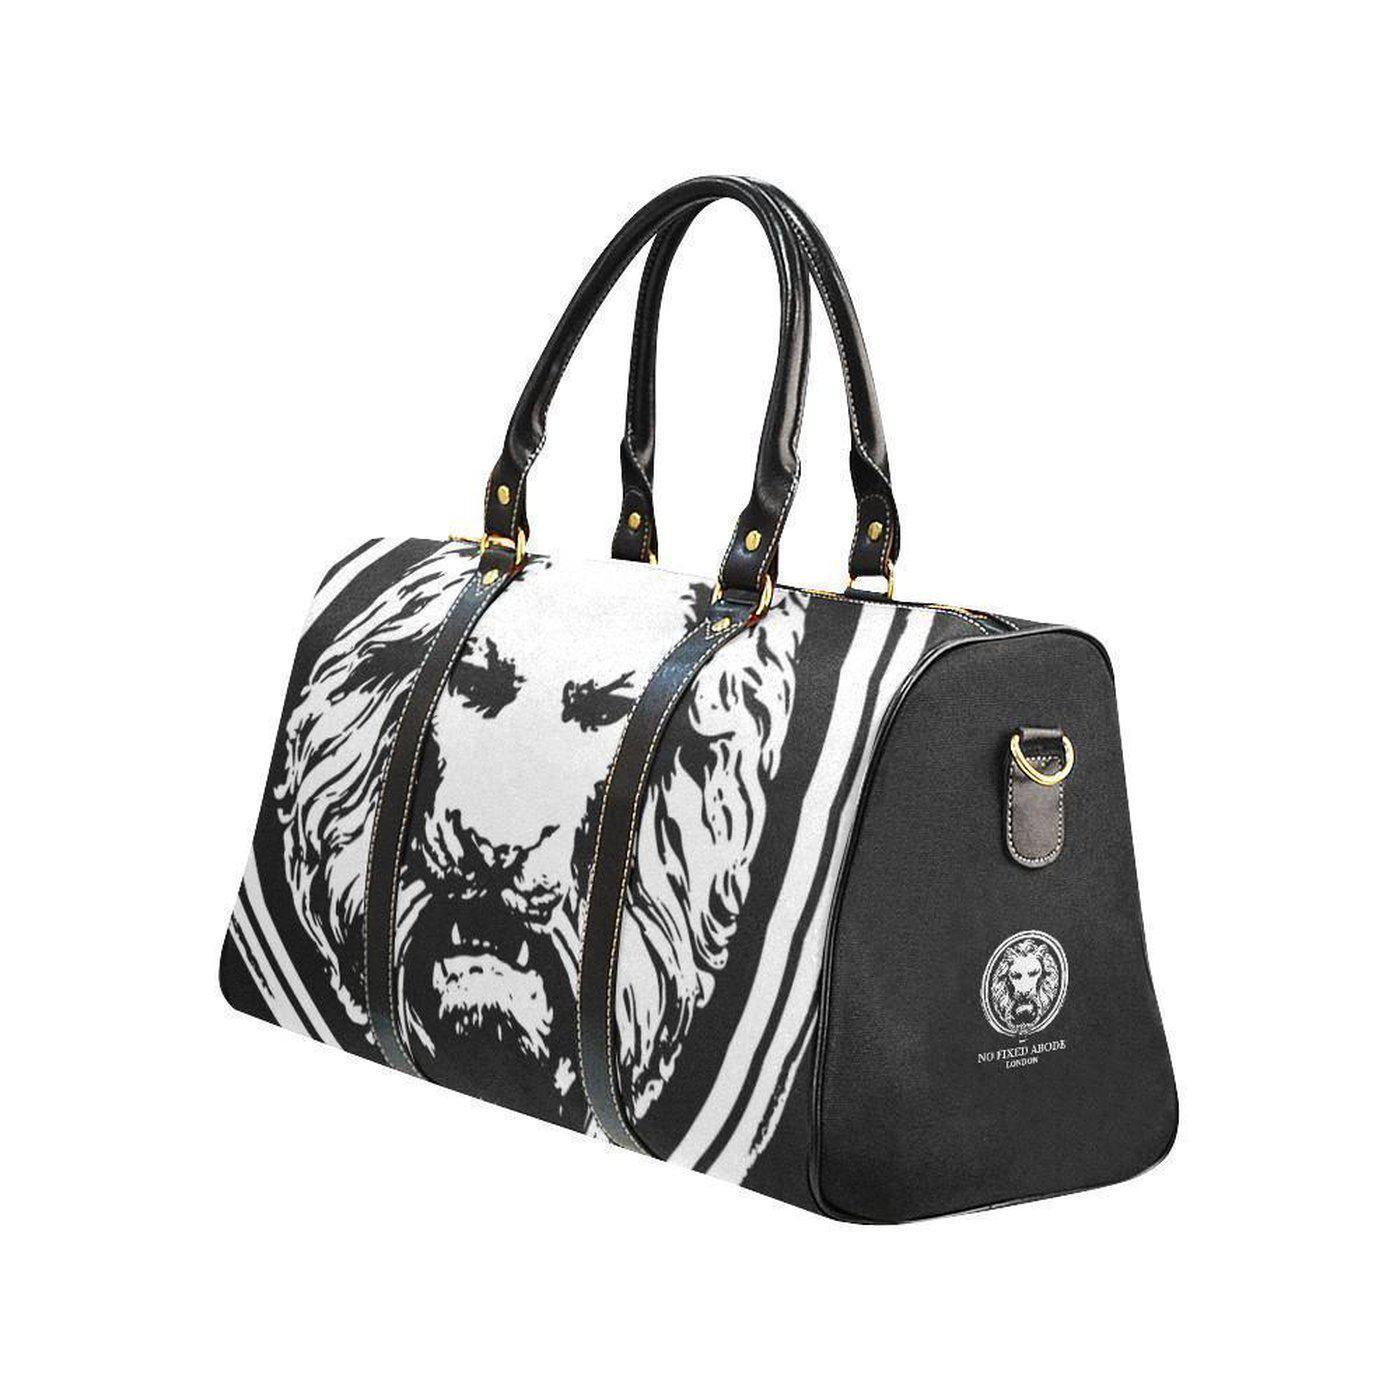 Small Black Lion Travel bag - NO FIXED ABODE Punkrock Mens Luxury Streetwear UK